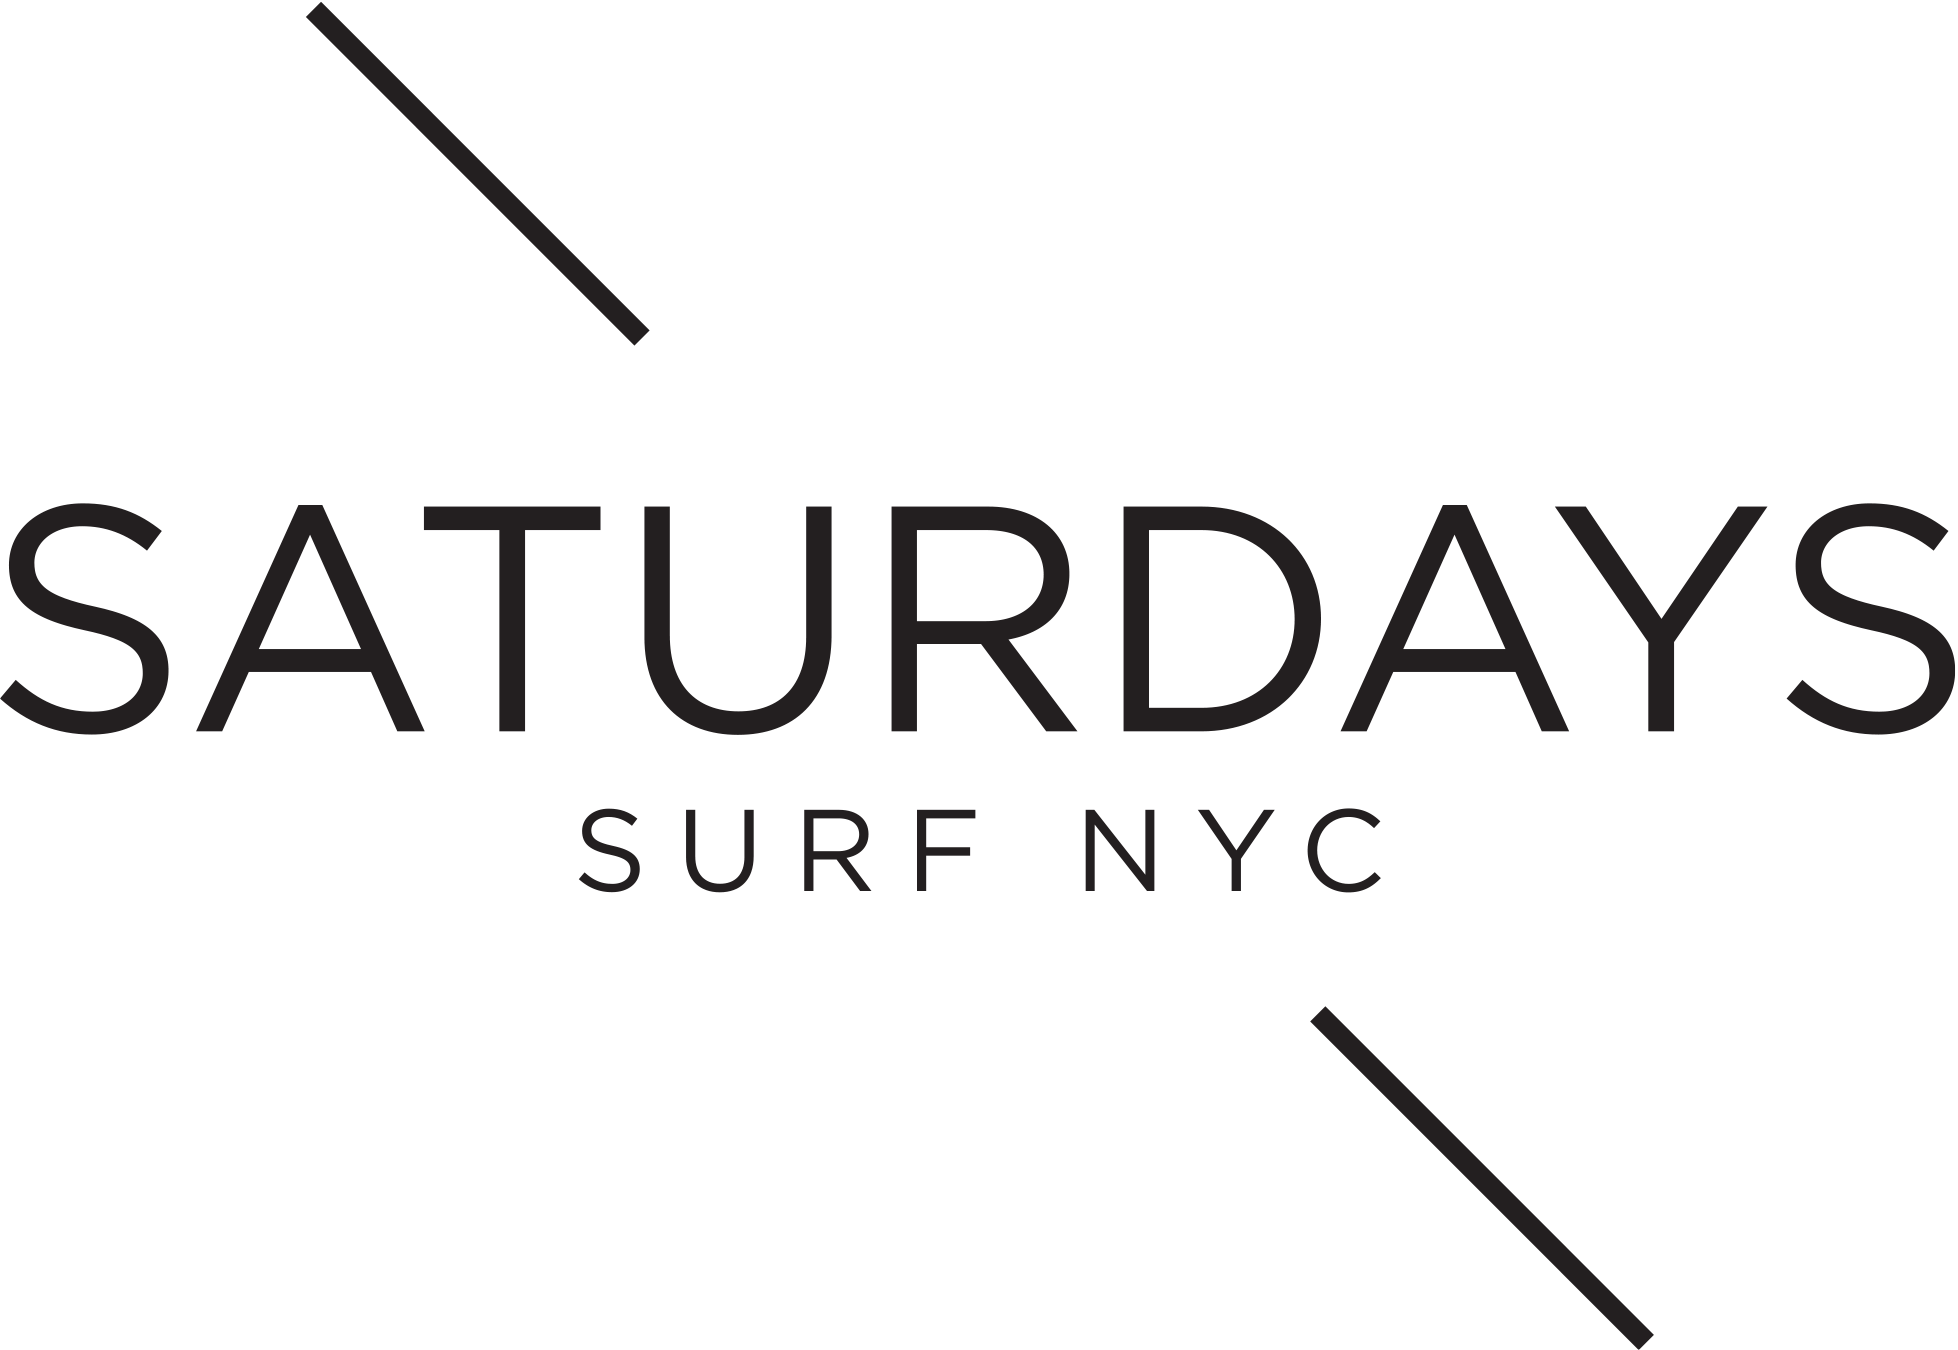 Saturdays Surf NYC | STAG